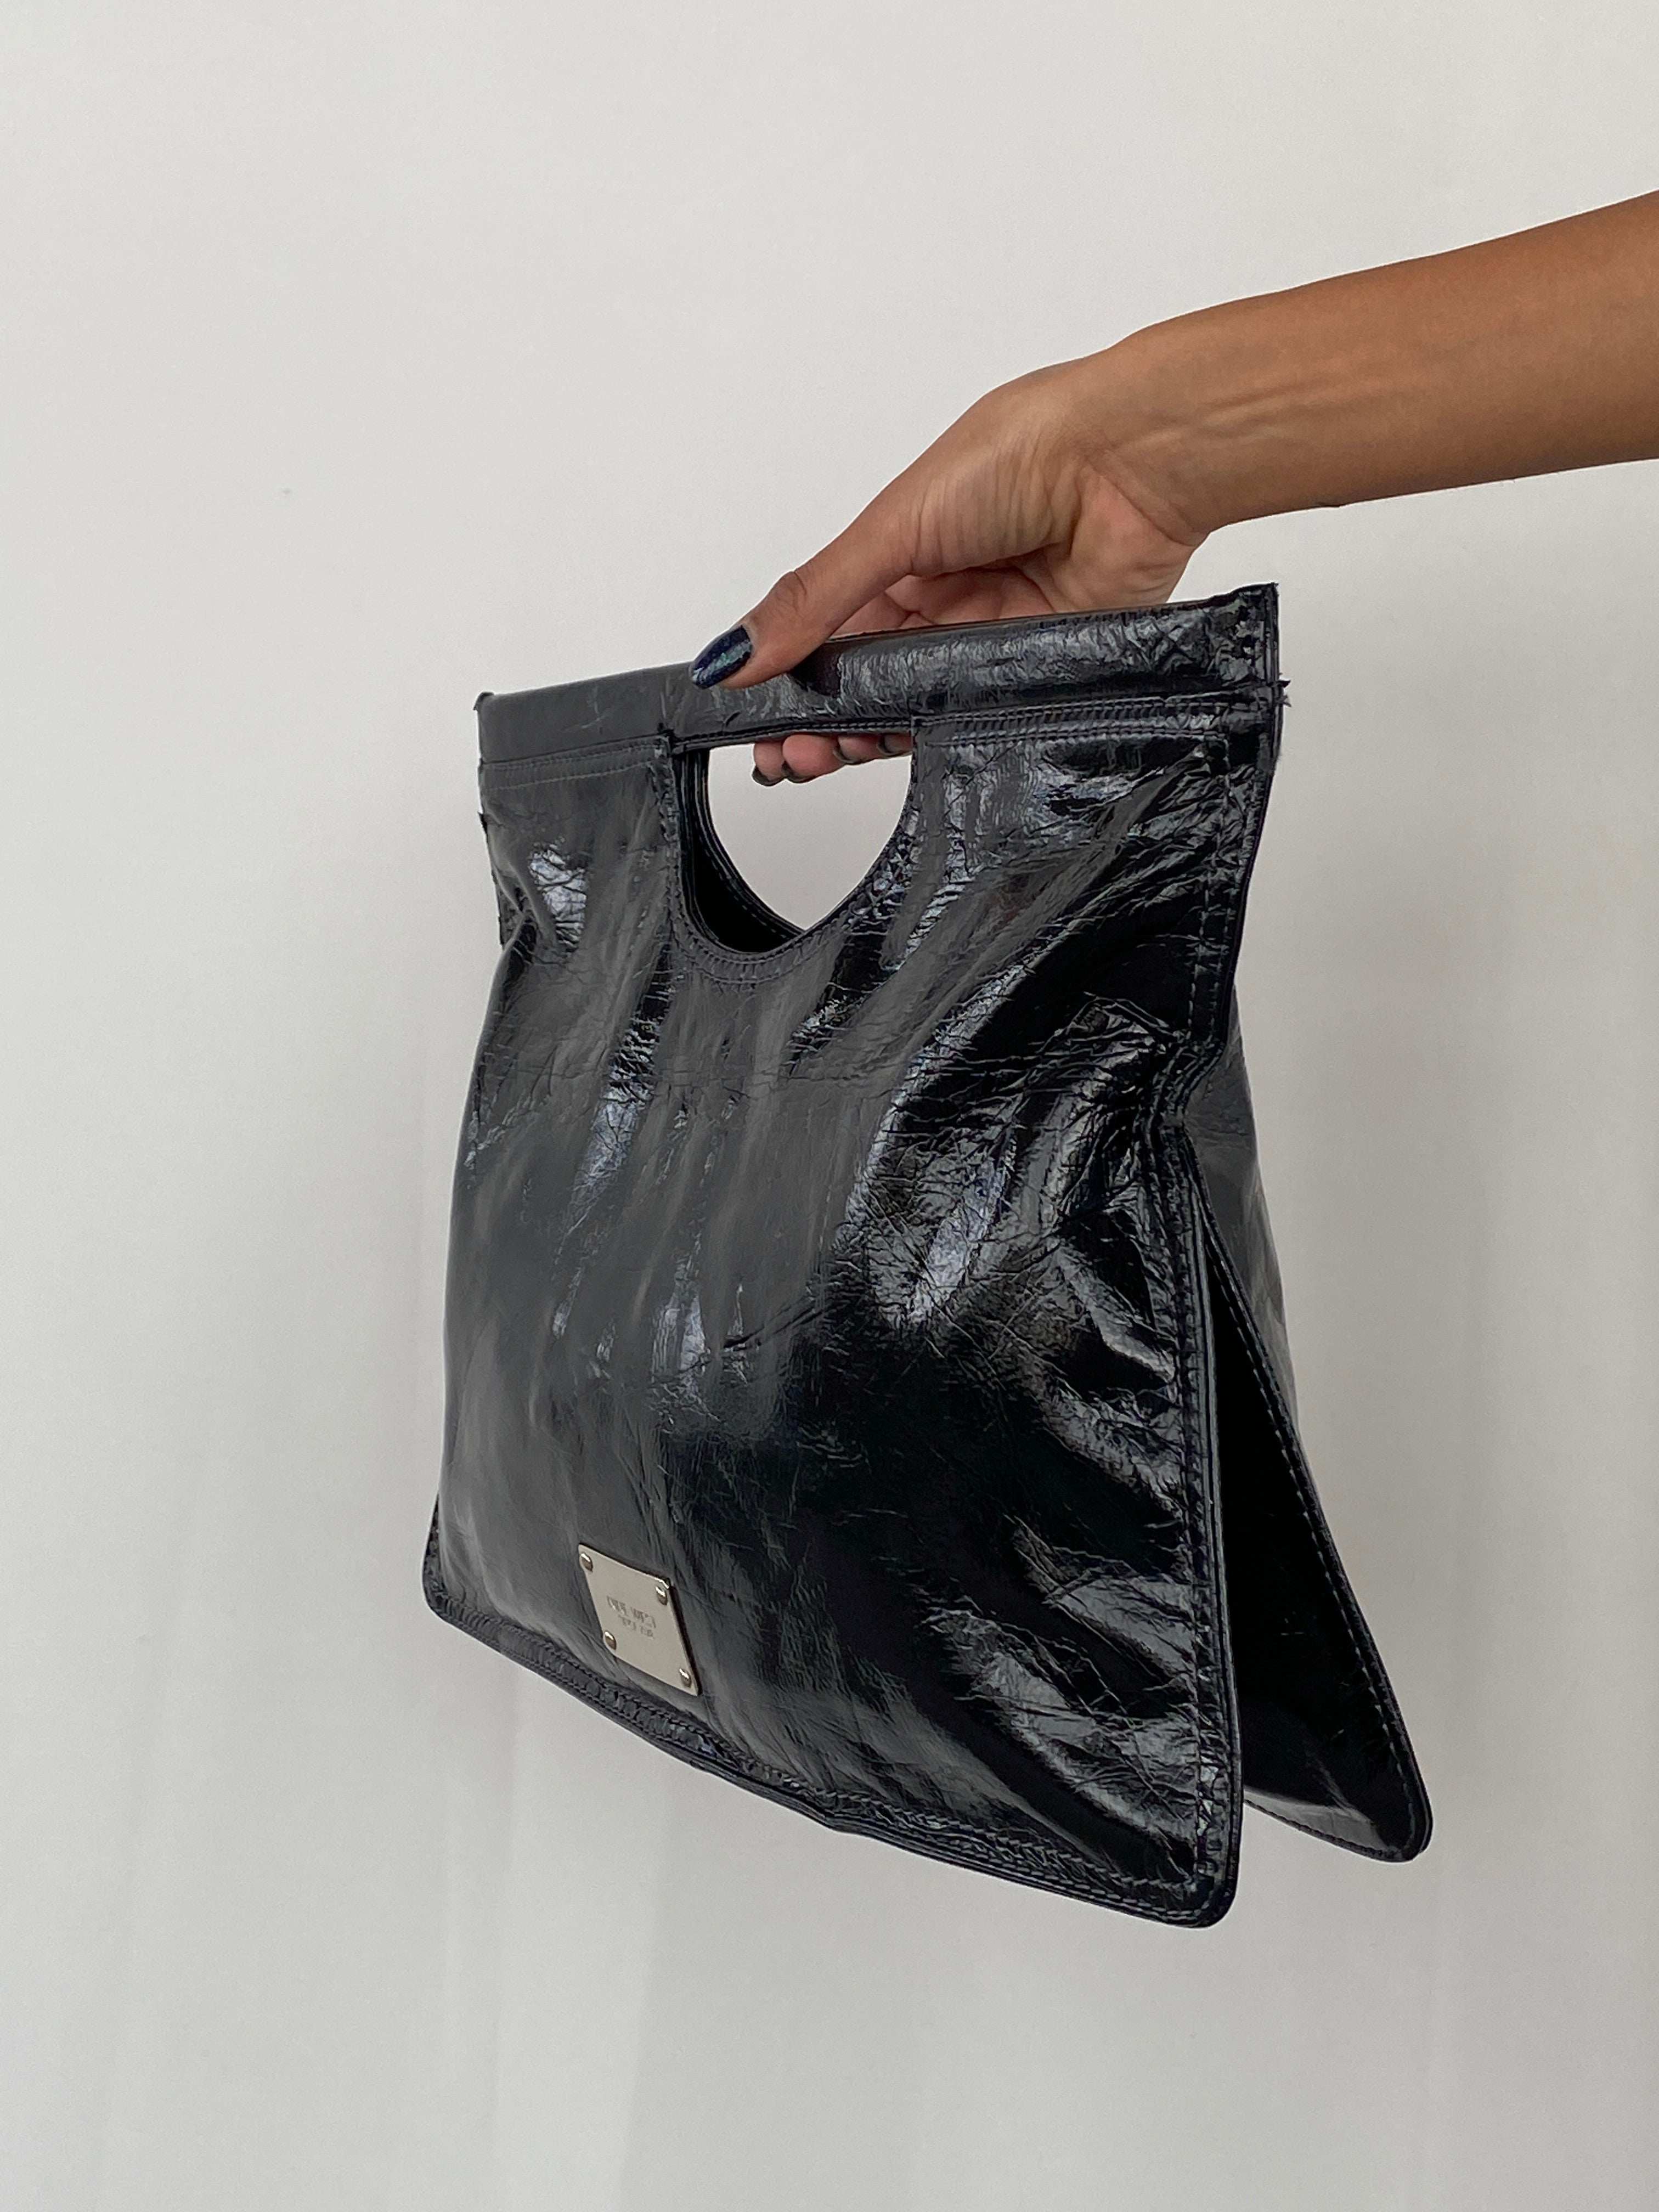 Nine West Black Patent Leather Clutch - Balagan Vintage Handbags 00s, bag, handbag, Nine West